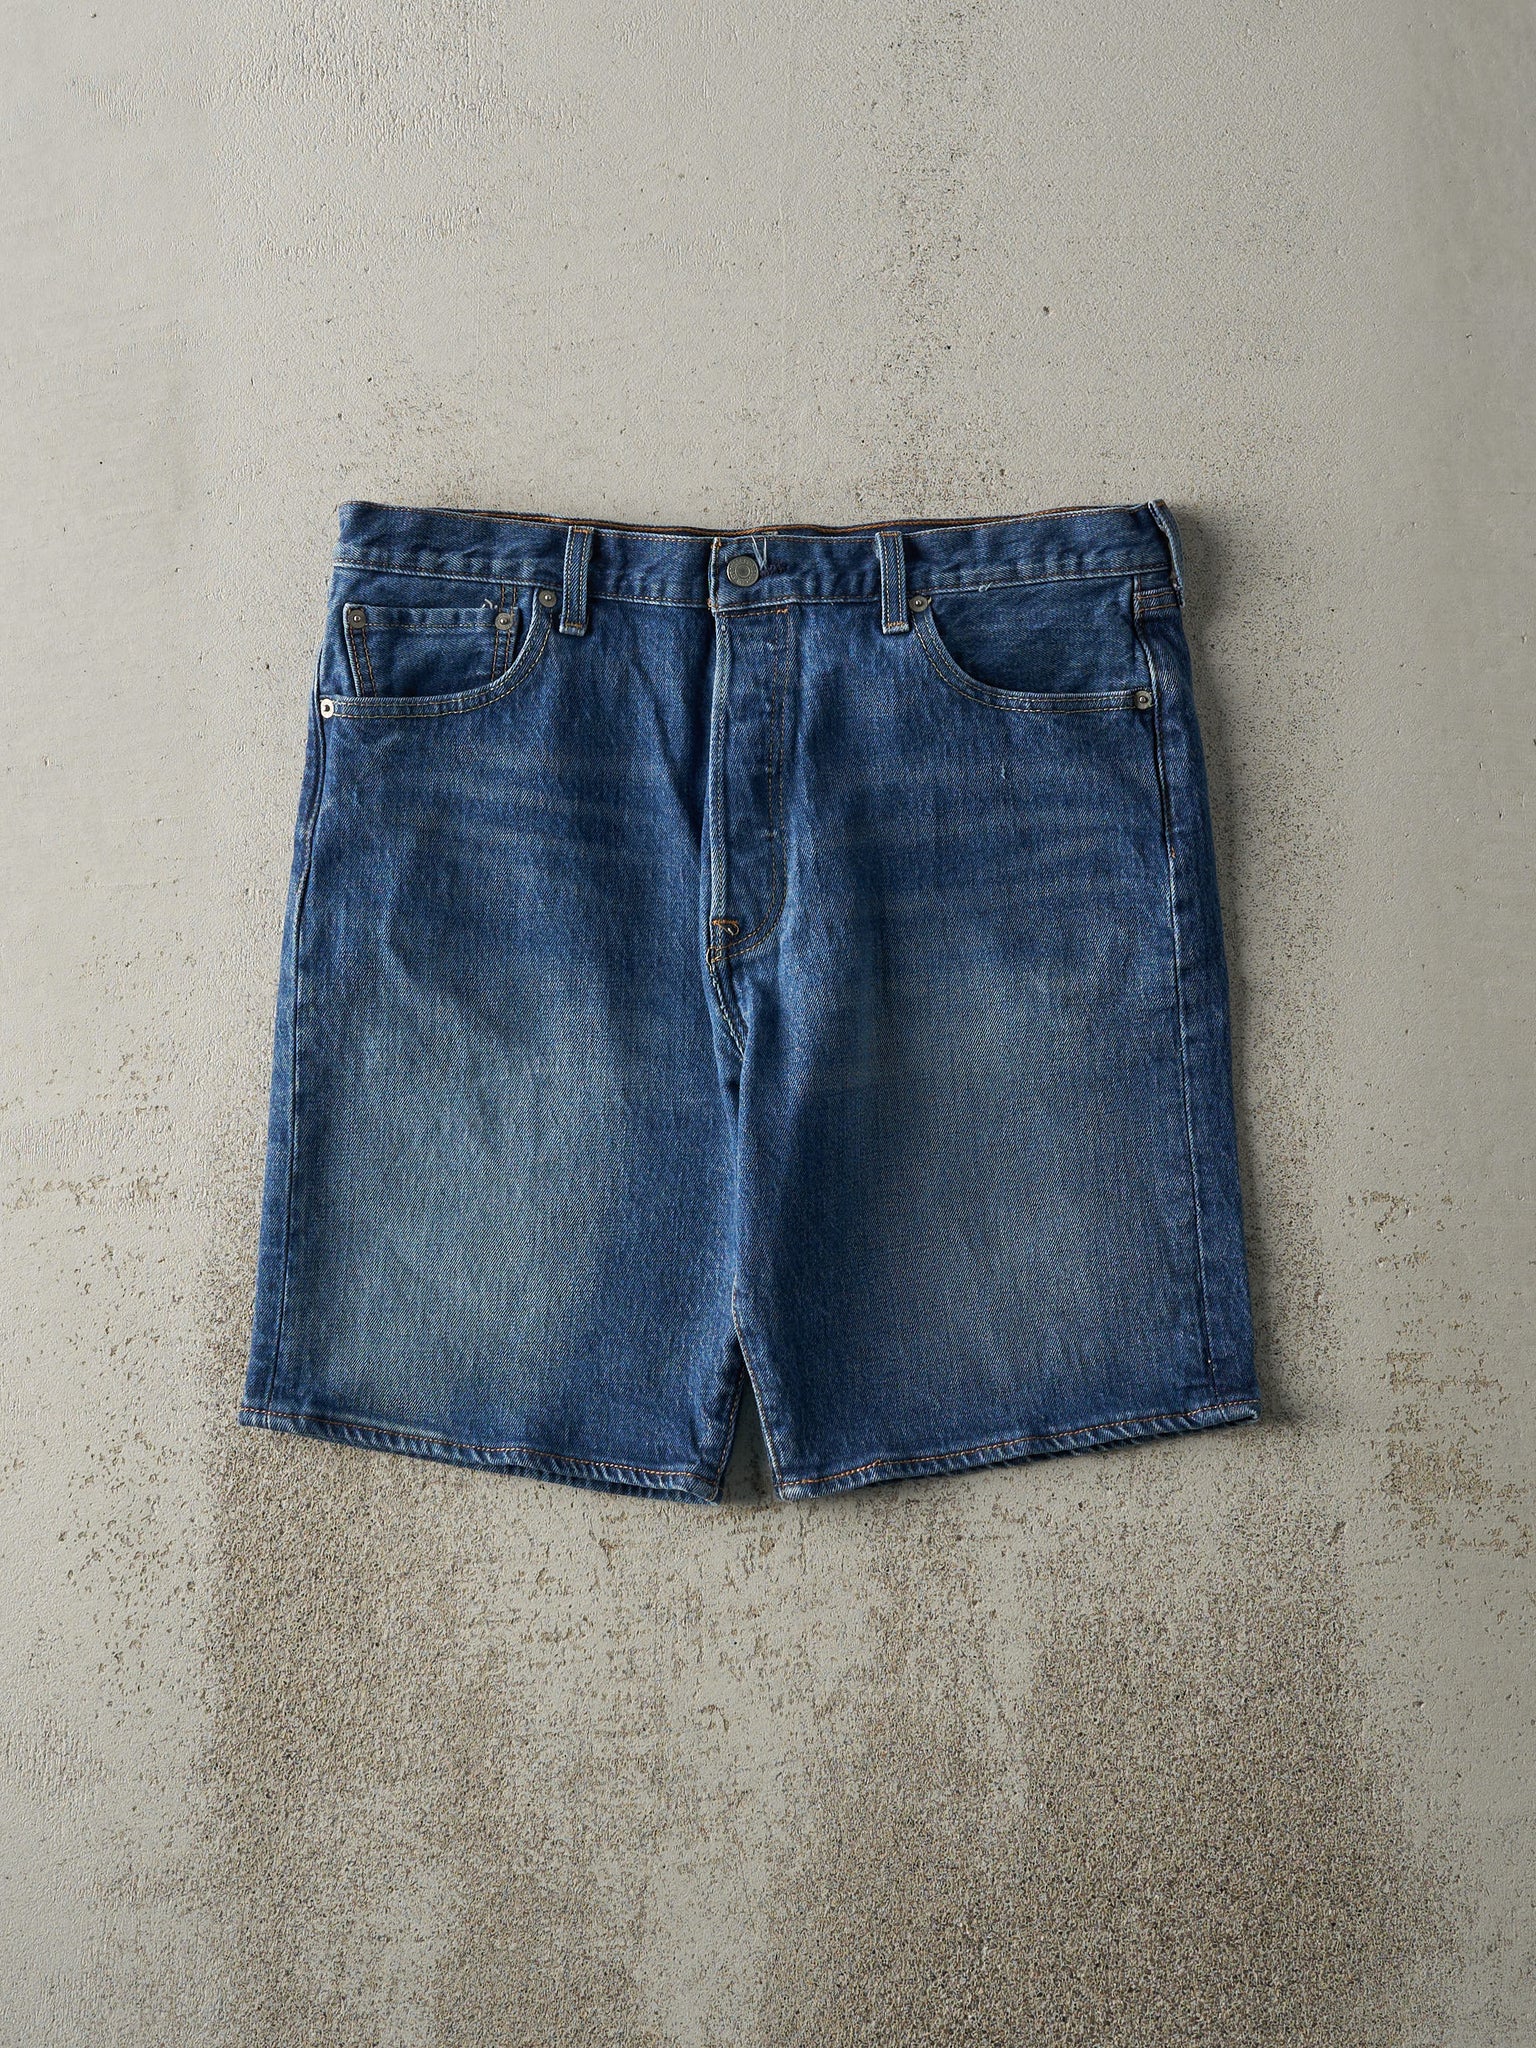 Vintage Y2K Dark Wash Levi's 501 Jean Shorts (35x8.5)